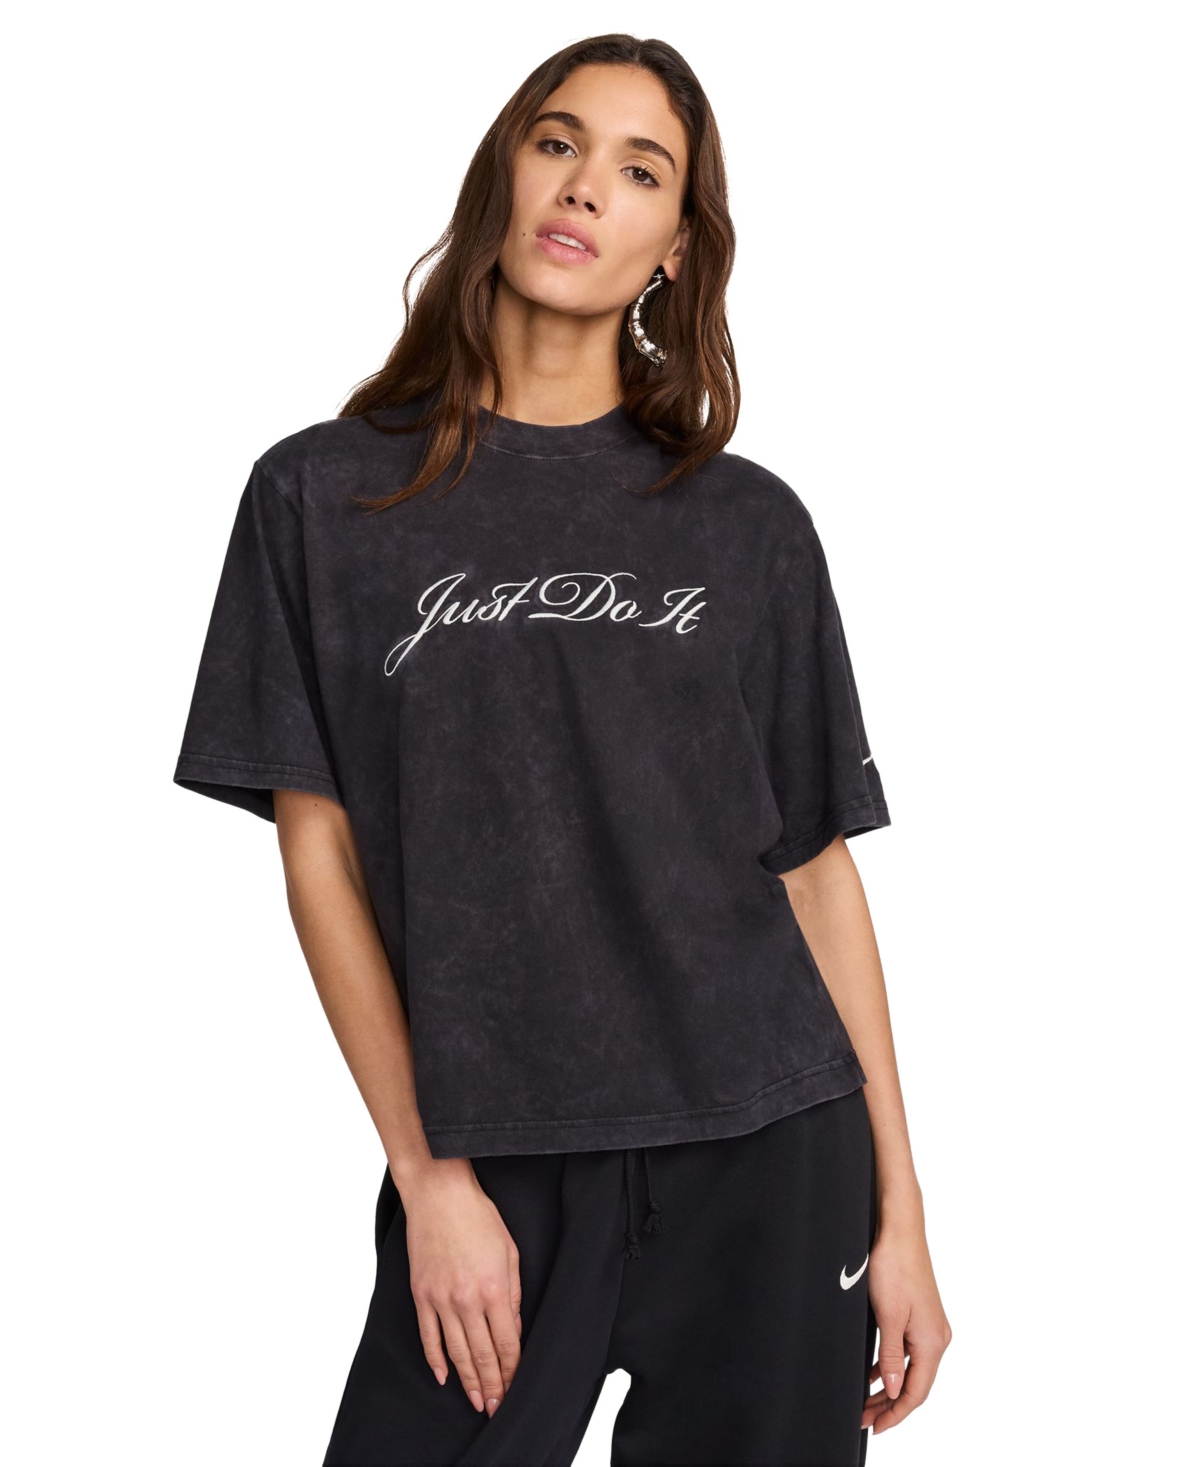 Women's Sportswear Cotton Crewneck Short-Sleeve T-Shirt - Black/photon Dust